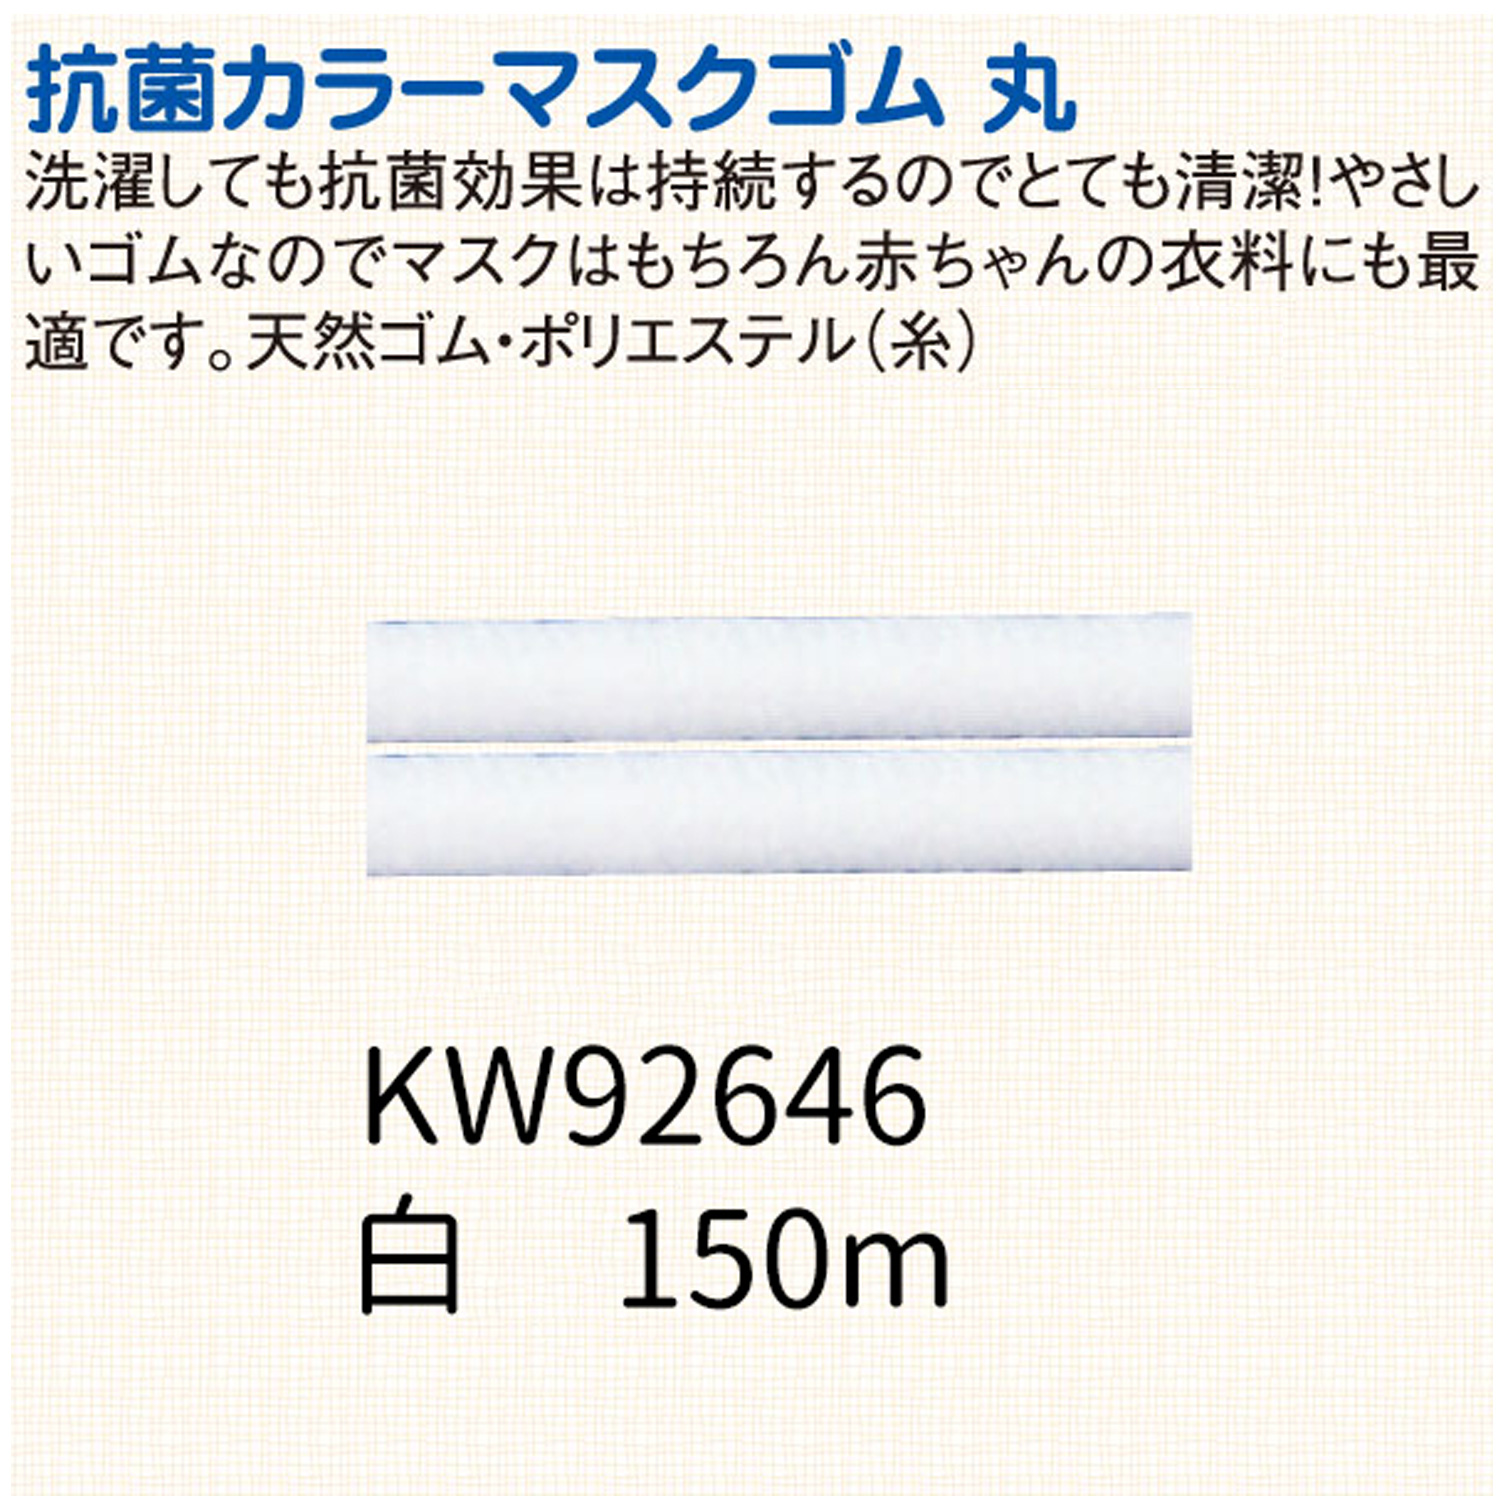 KW92646 Antibacterial Mask Elastic Bobbin Roll 150 m Roll White (Roll)